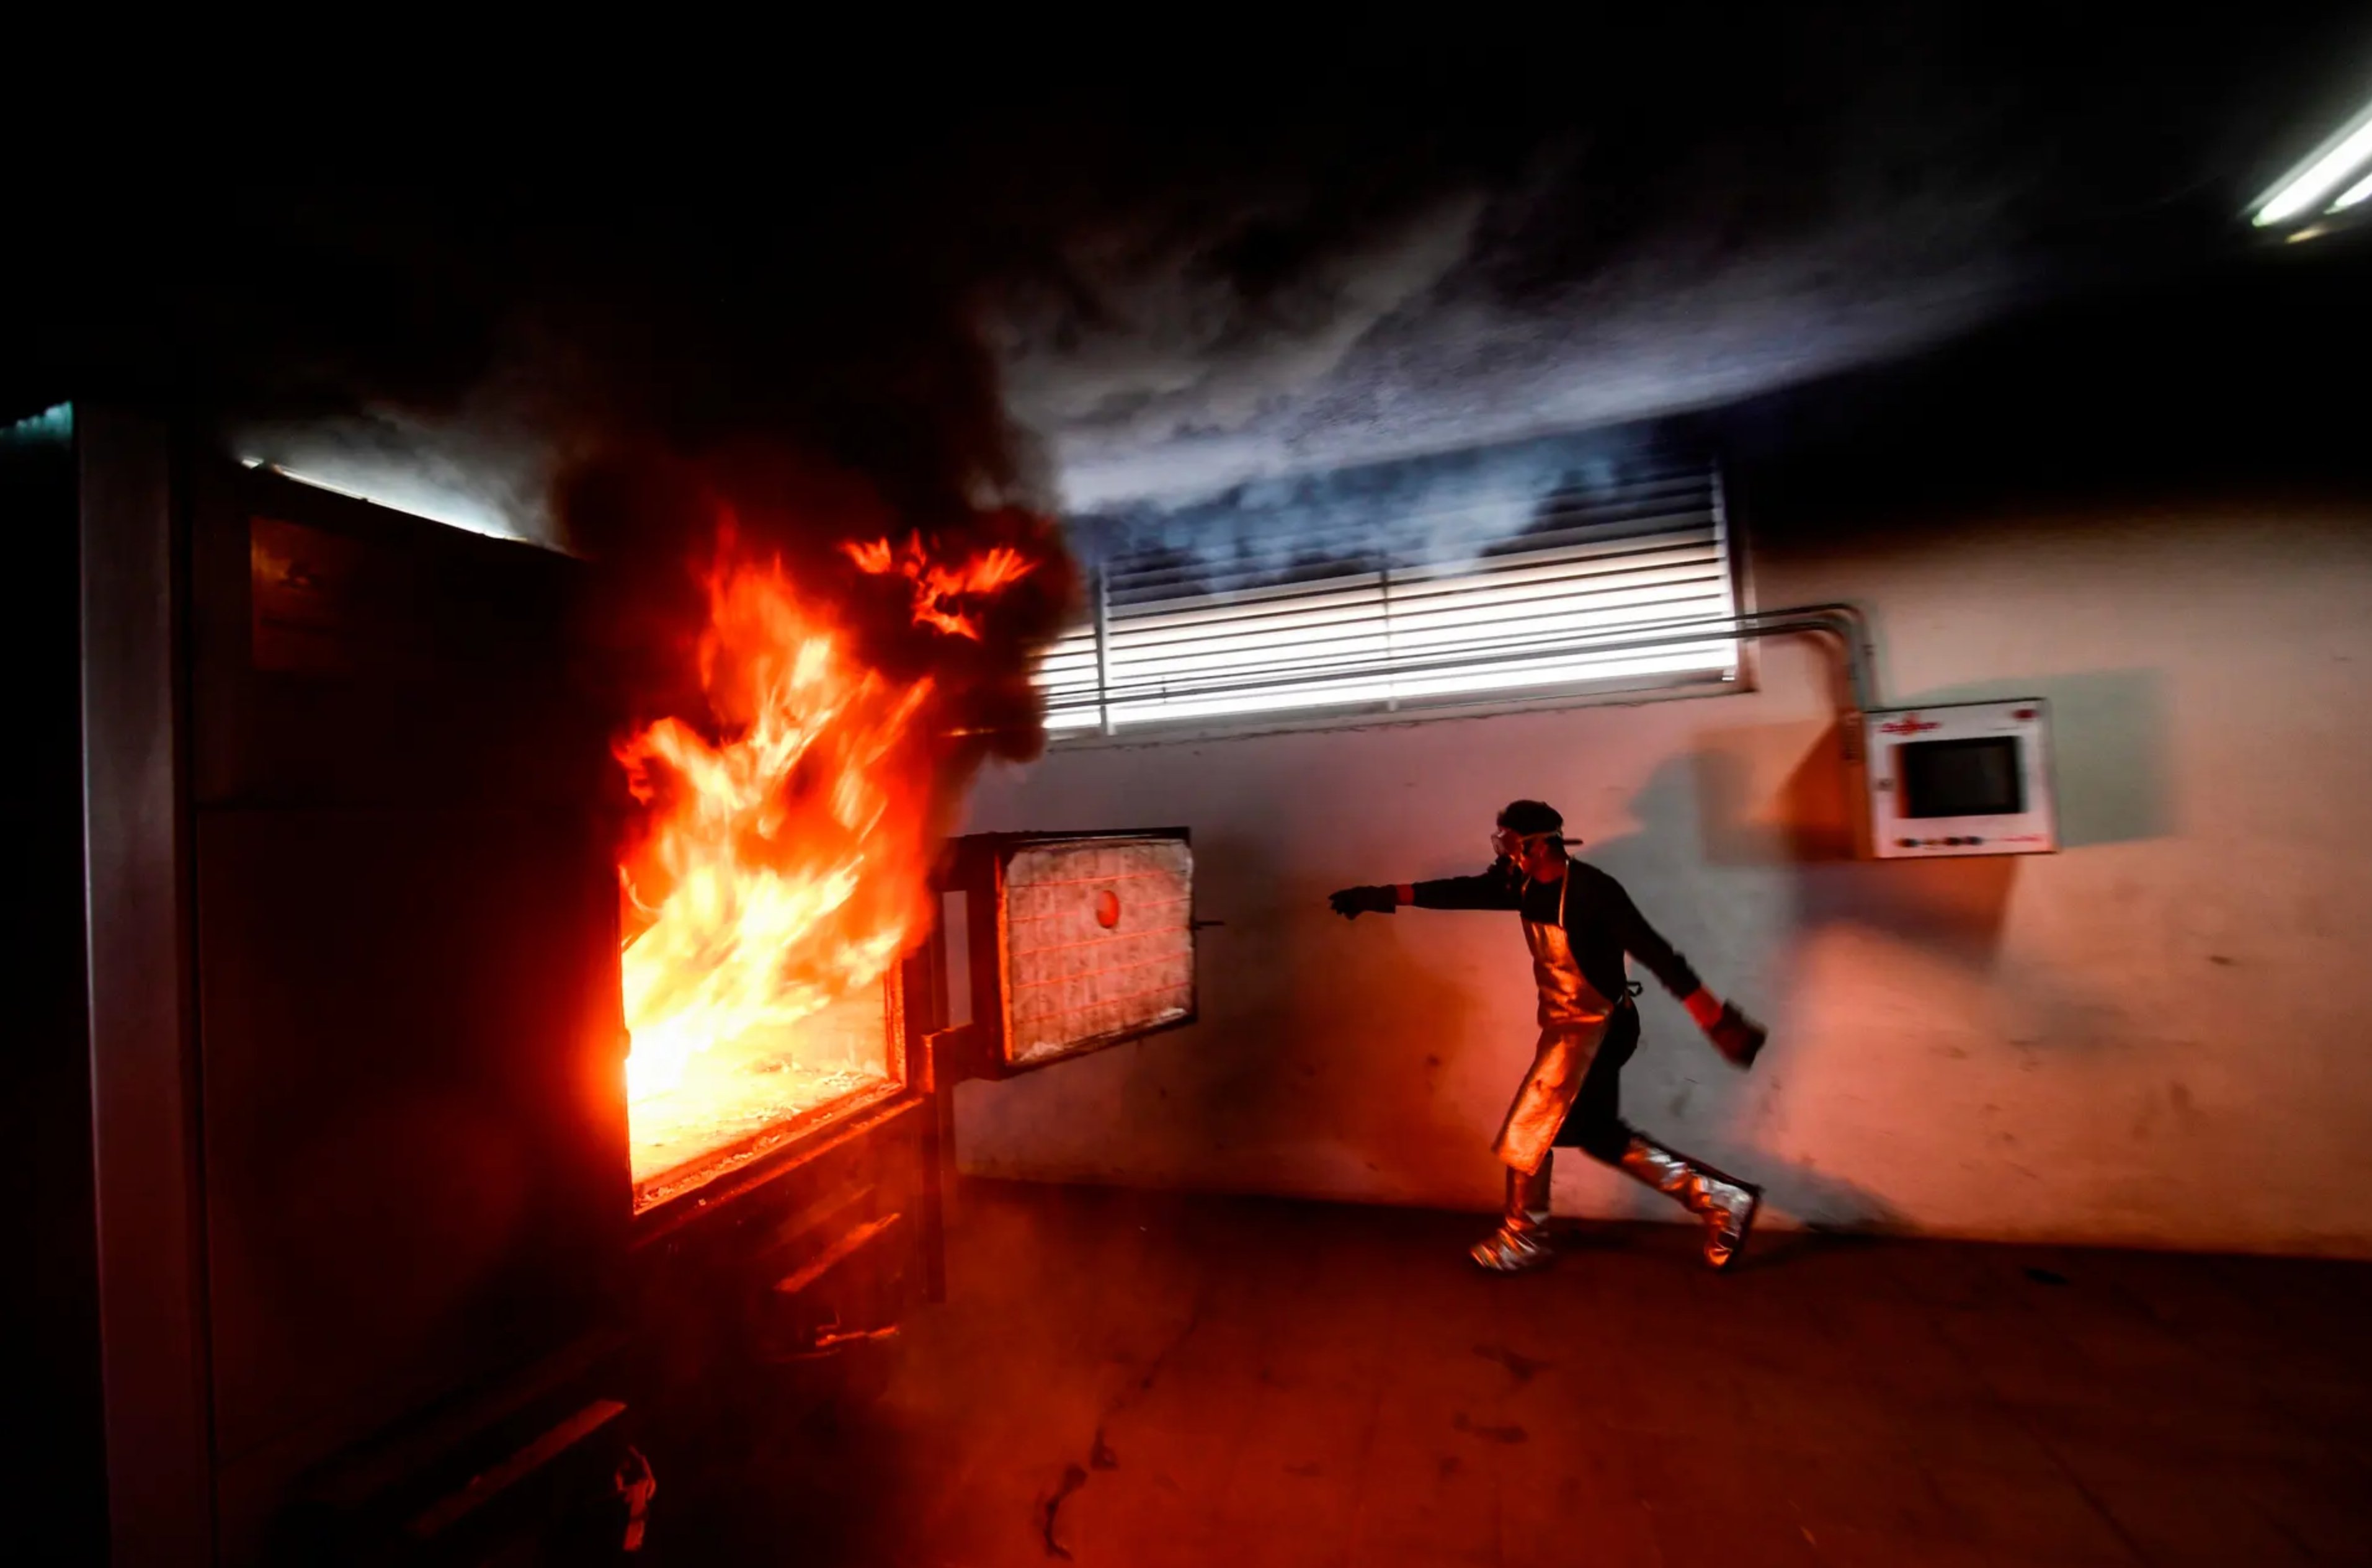 سوزاندن اجساد کرونا در کوره + عکس